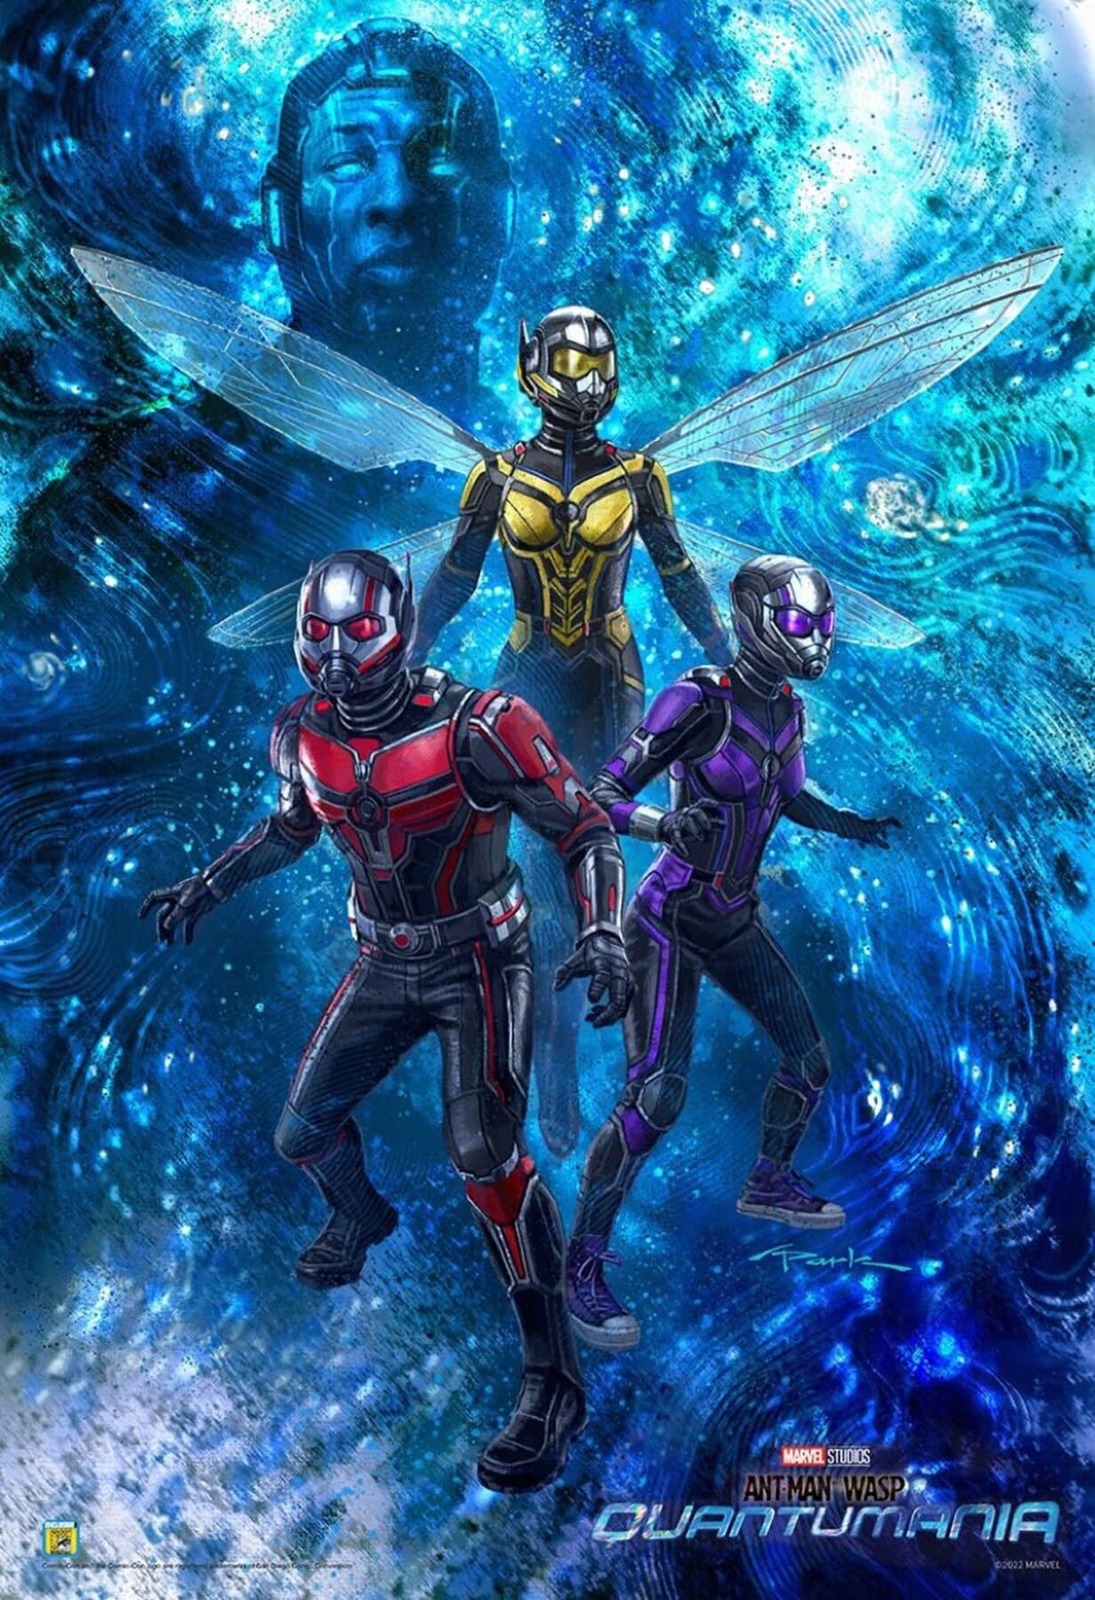 Ant-Man and the Wasp Quantumania Poster Marvel Comics Art Film Print 11x17